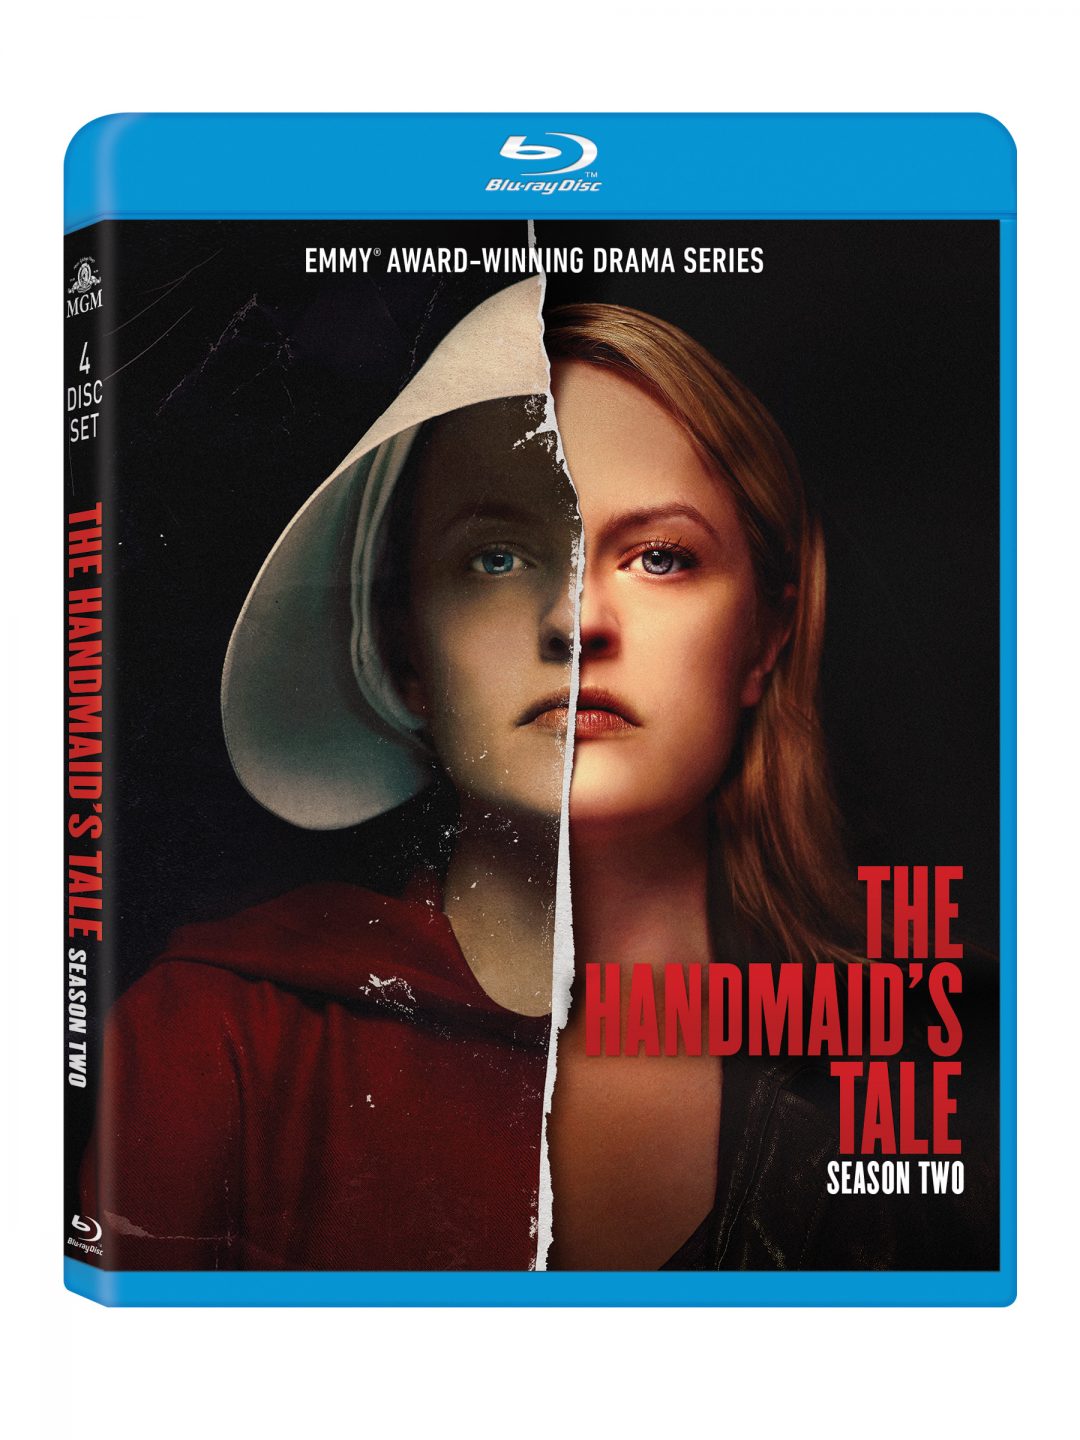 The Handmaid's Tale Season 2 Blu-Ray Combo Pack cover (20th Century Fox Home Entertainment)